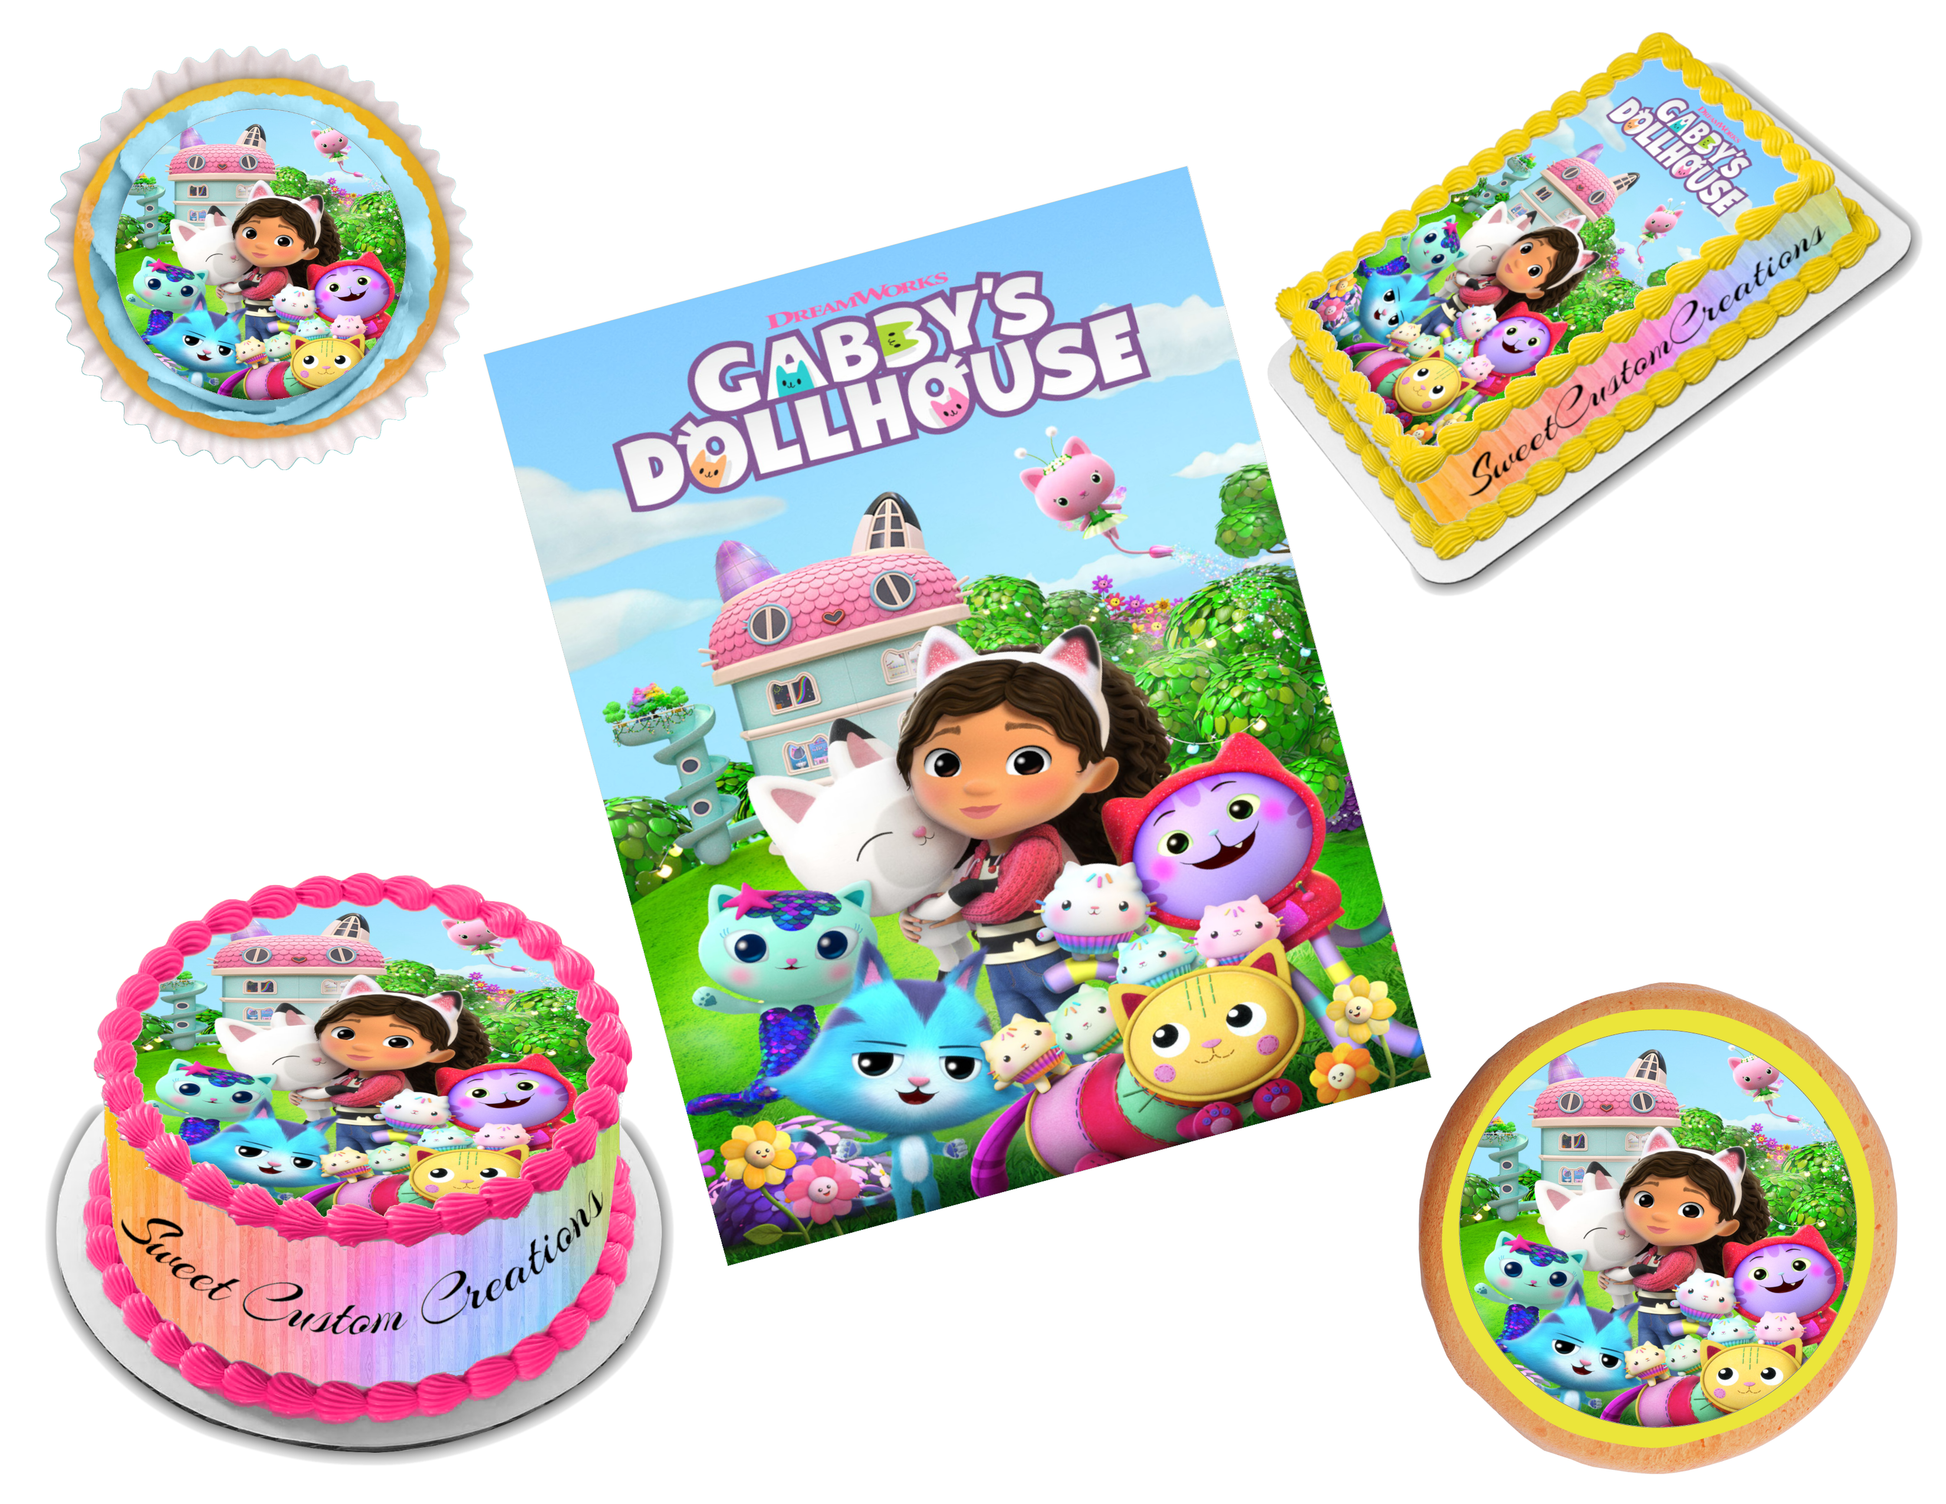 24 Gabby's Dollhouse Custom Stickers